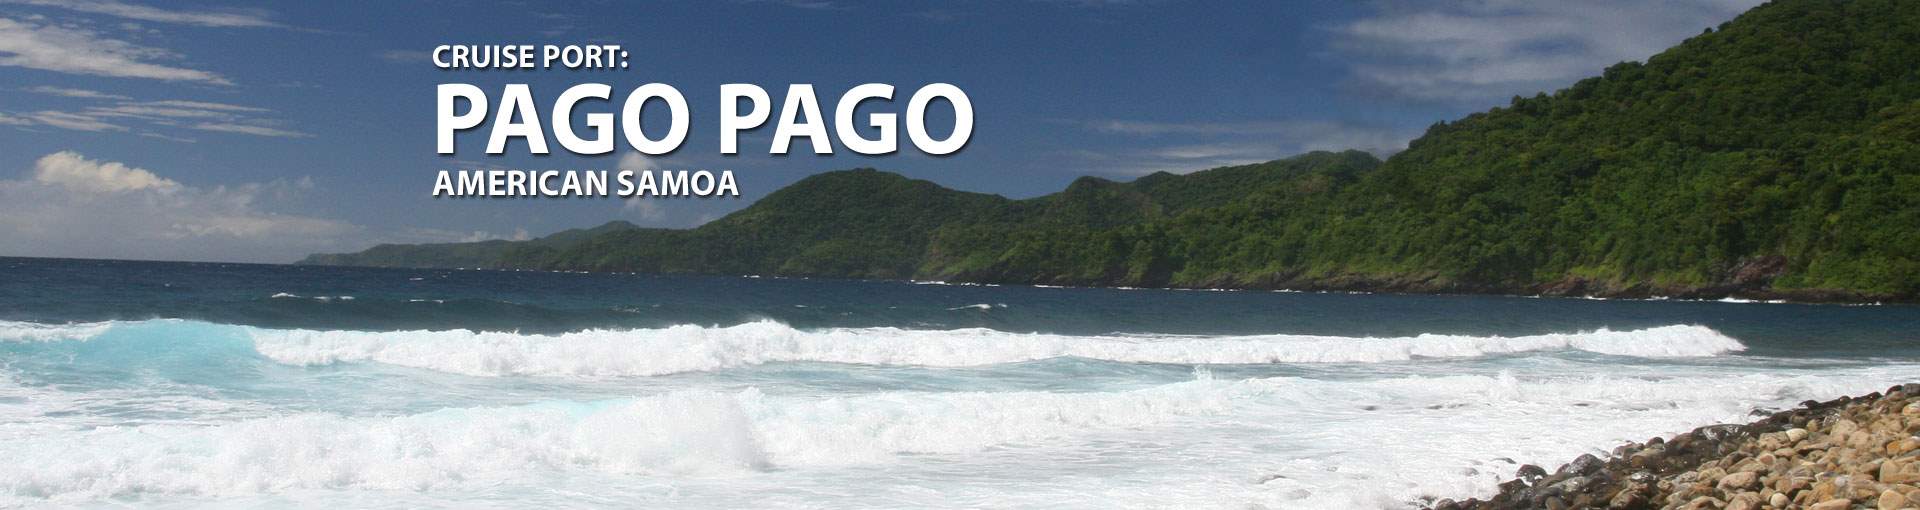 Pago Pago American Samoa Cruise Port 2019 2020 And 2021 Cruises To